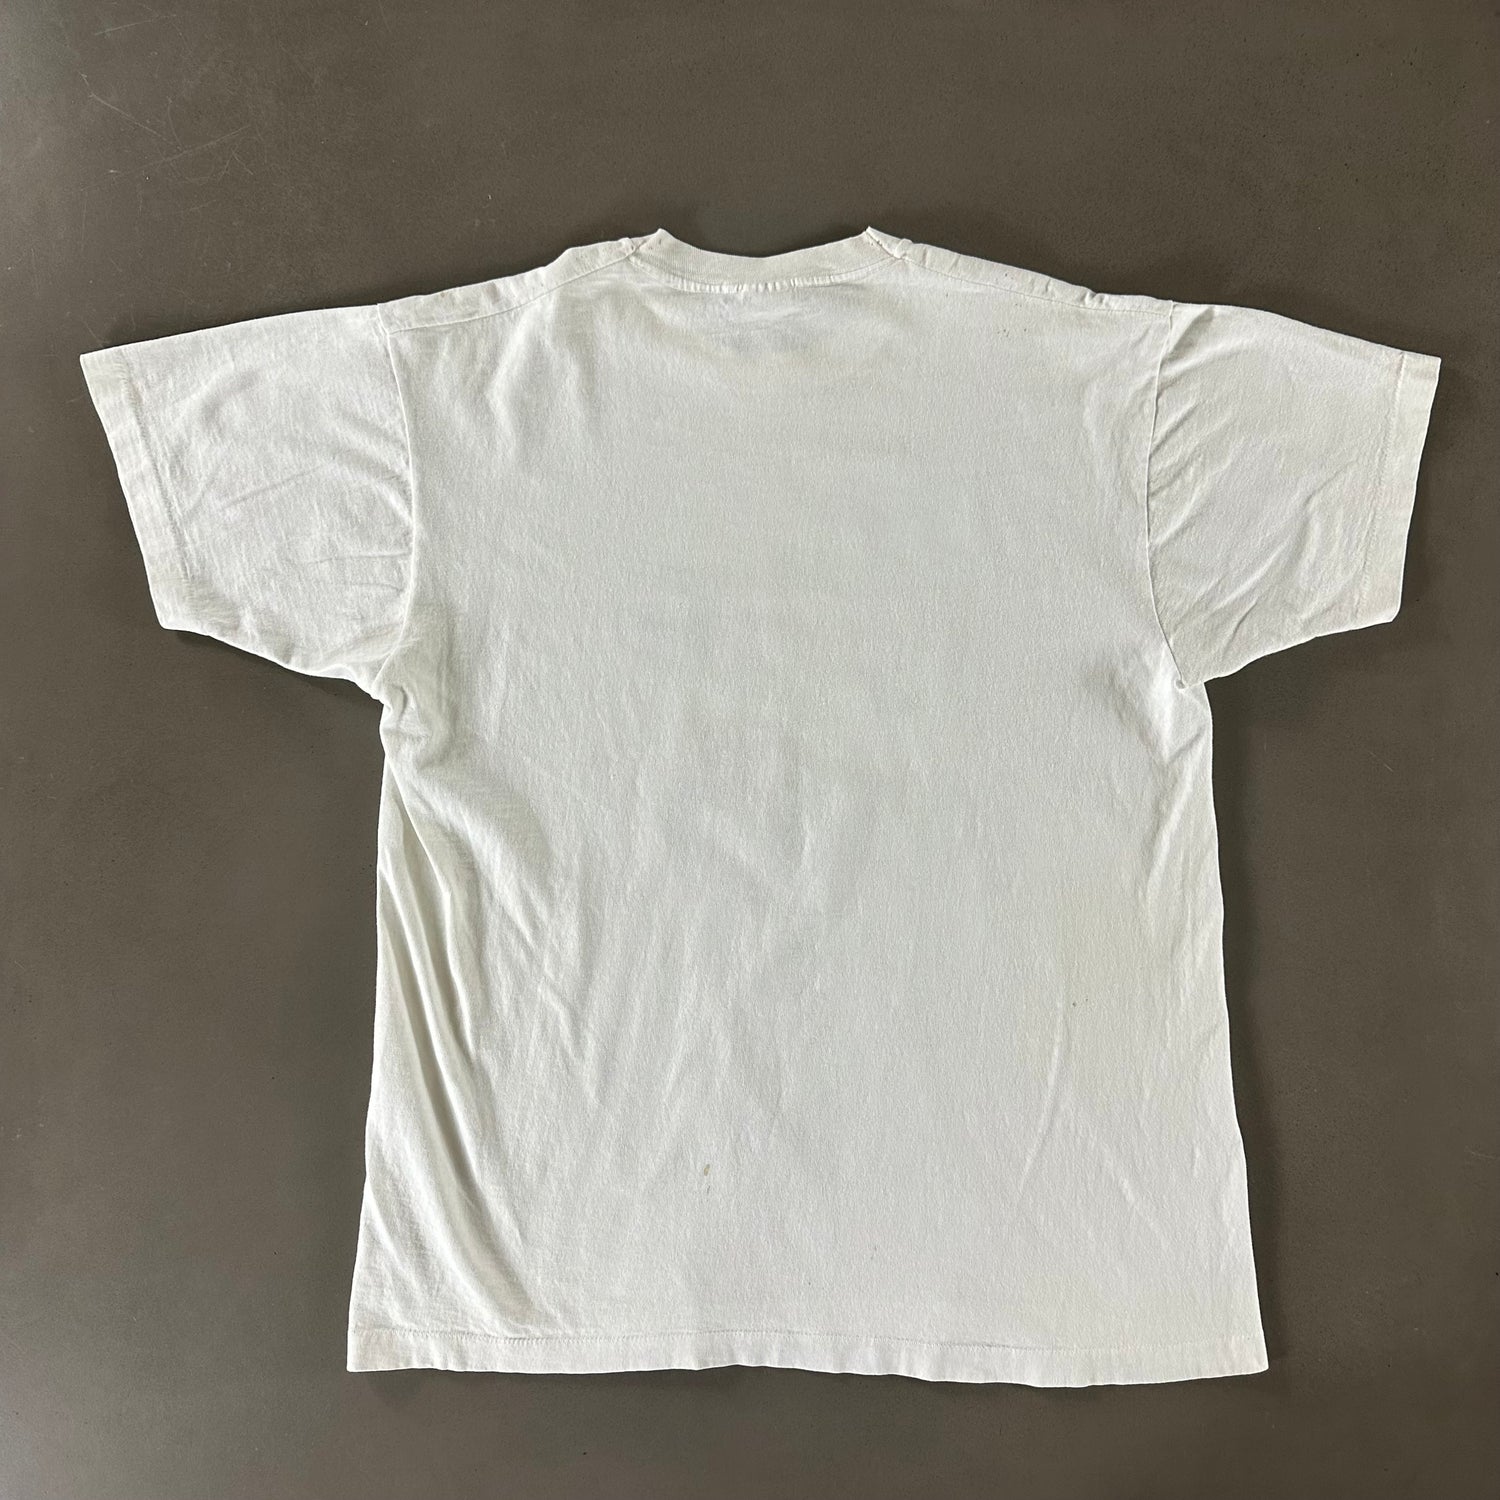 Vintage 1980s Waikiki T-shirt size XL